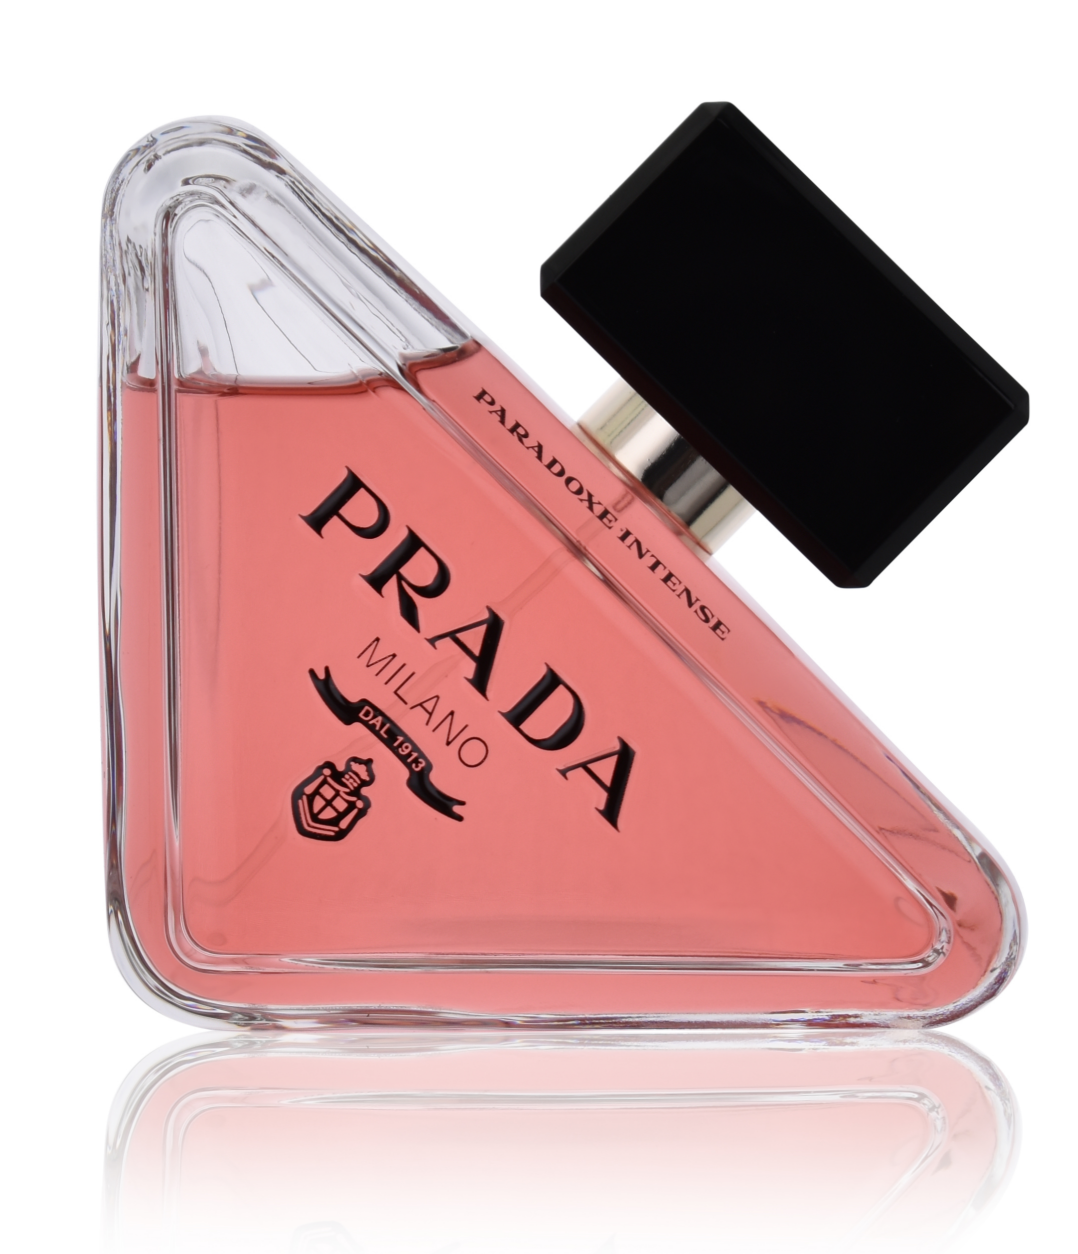 Prada Paradoxe Intense 30 ml Eau de Parfum  